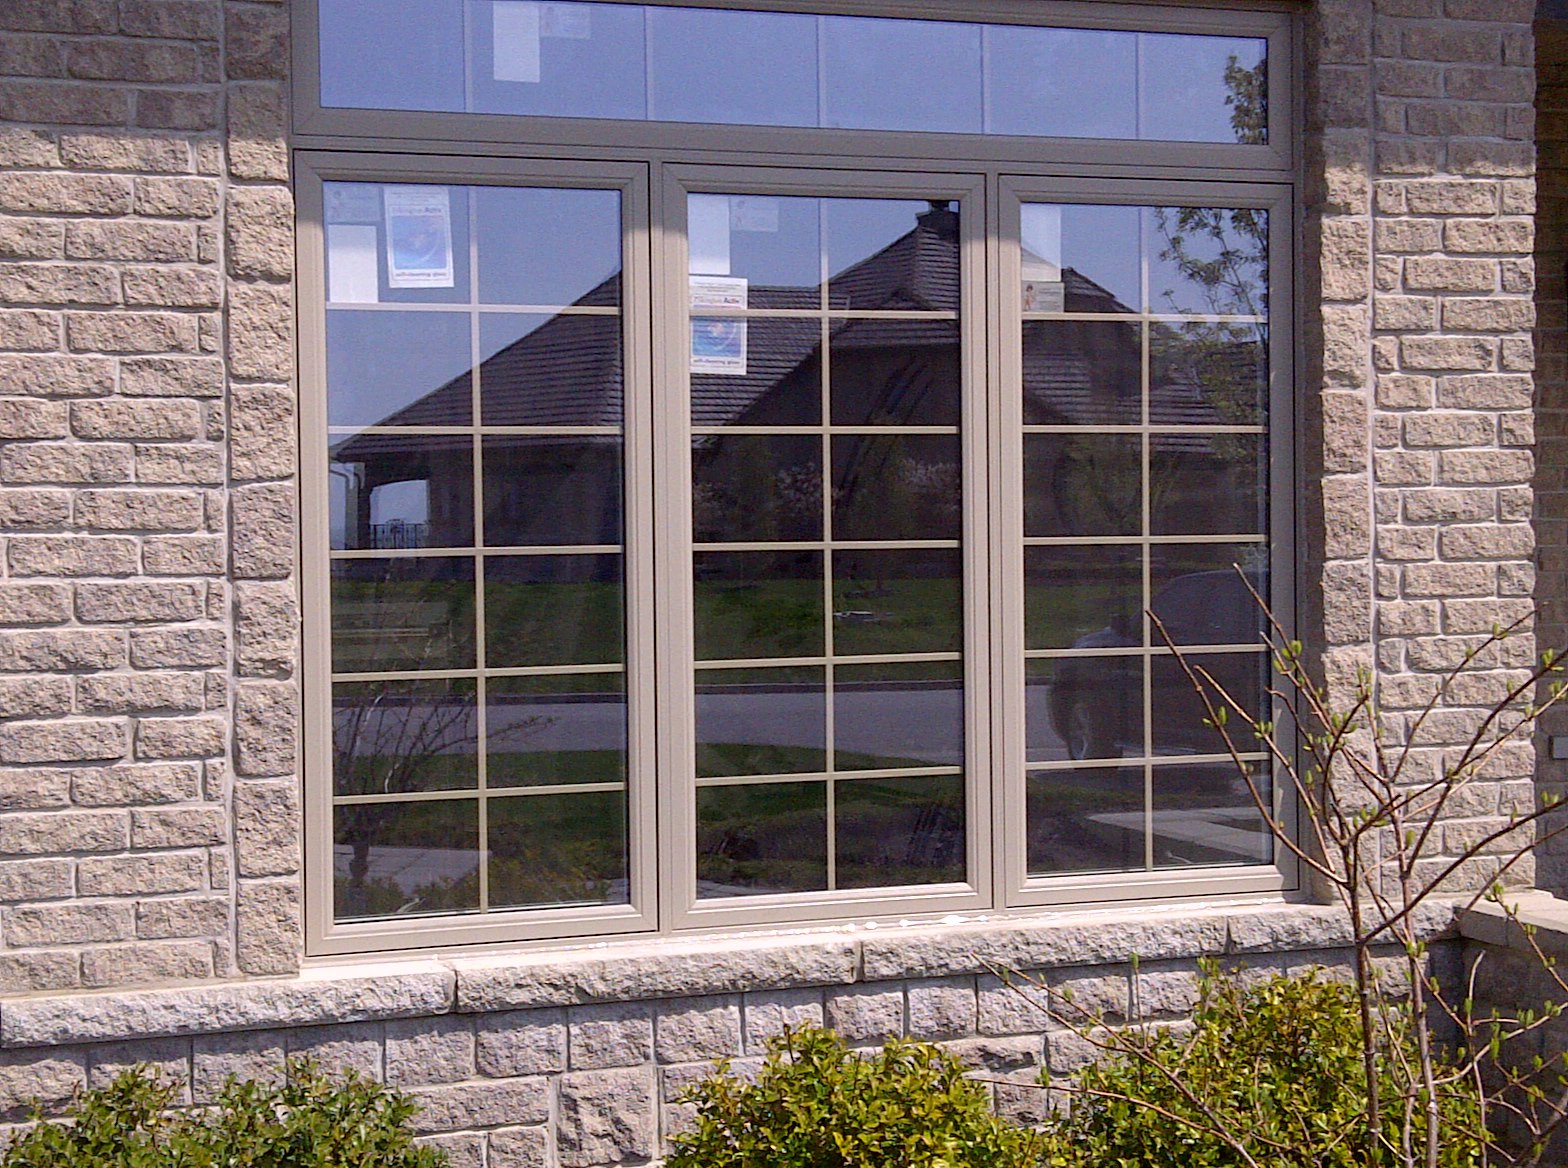 New Window to replace Builders Grade Window